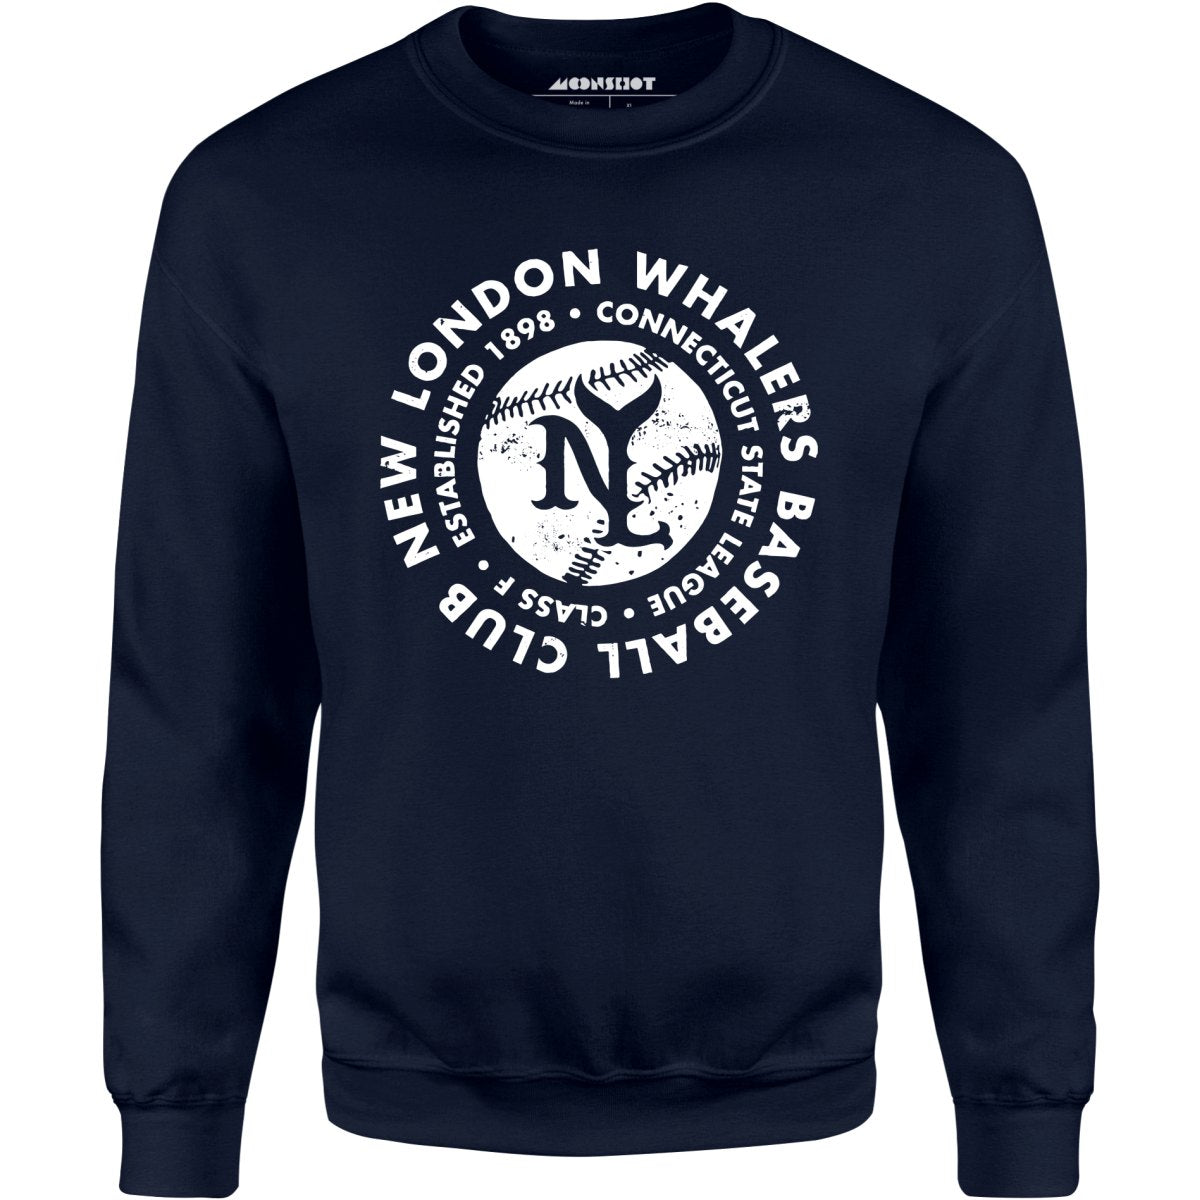 New London Whalers - Connecticut - Vintage Defunct Baseball Teams - Unisex Sweatshirt